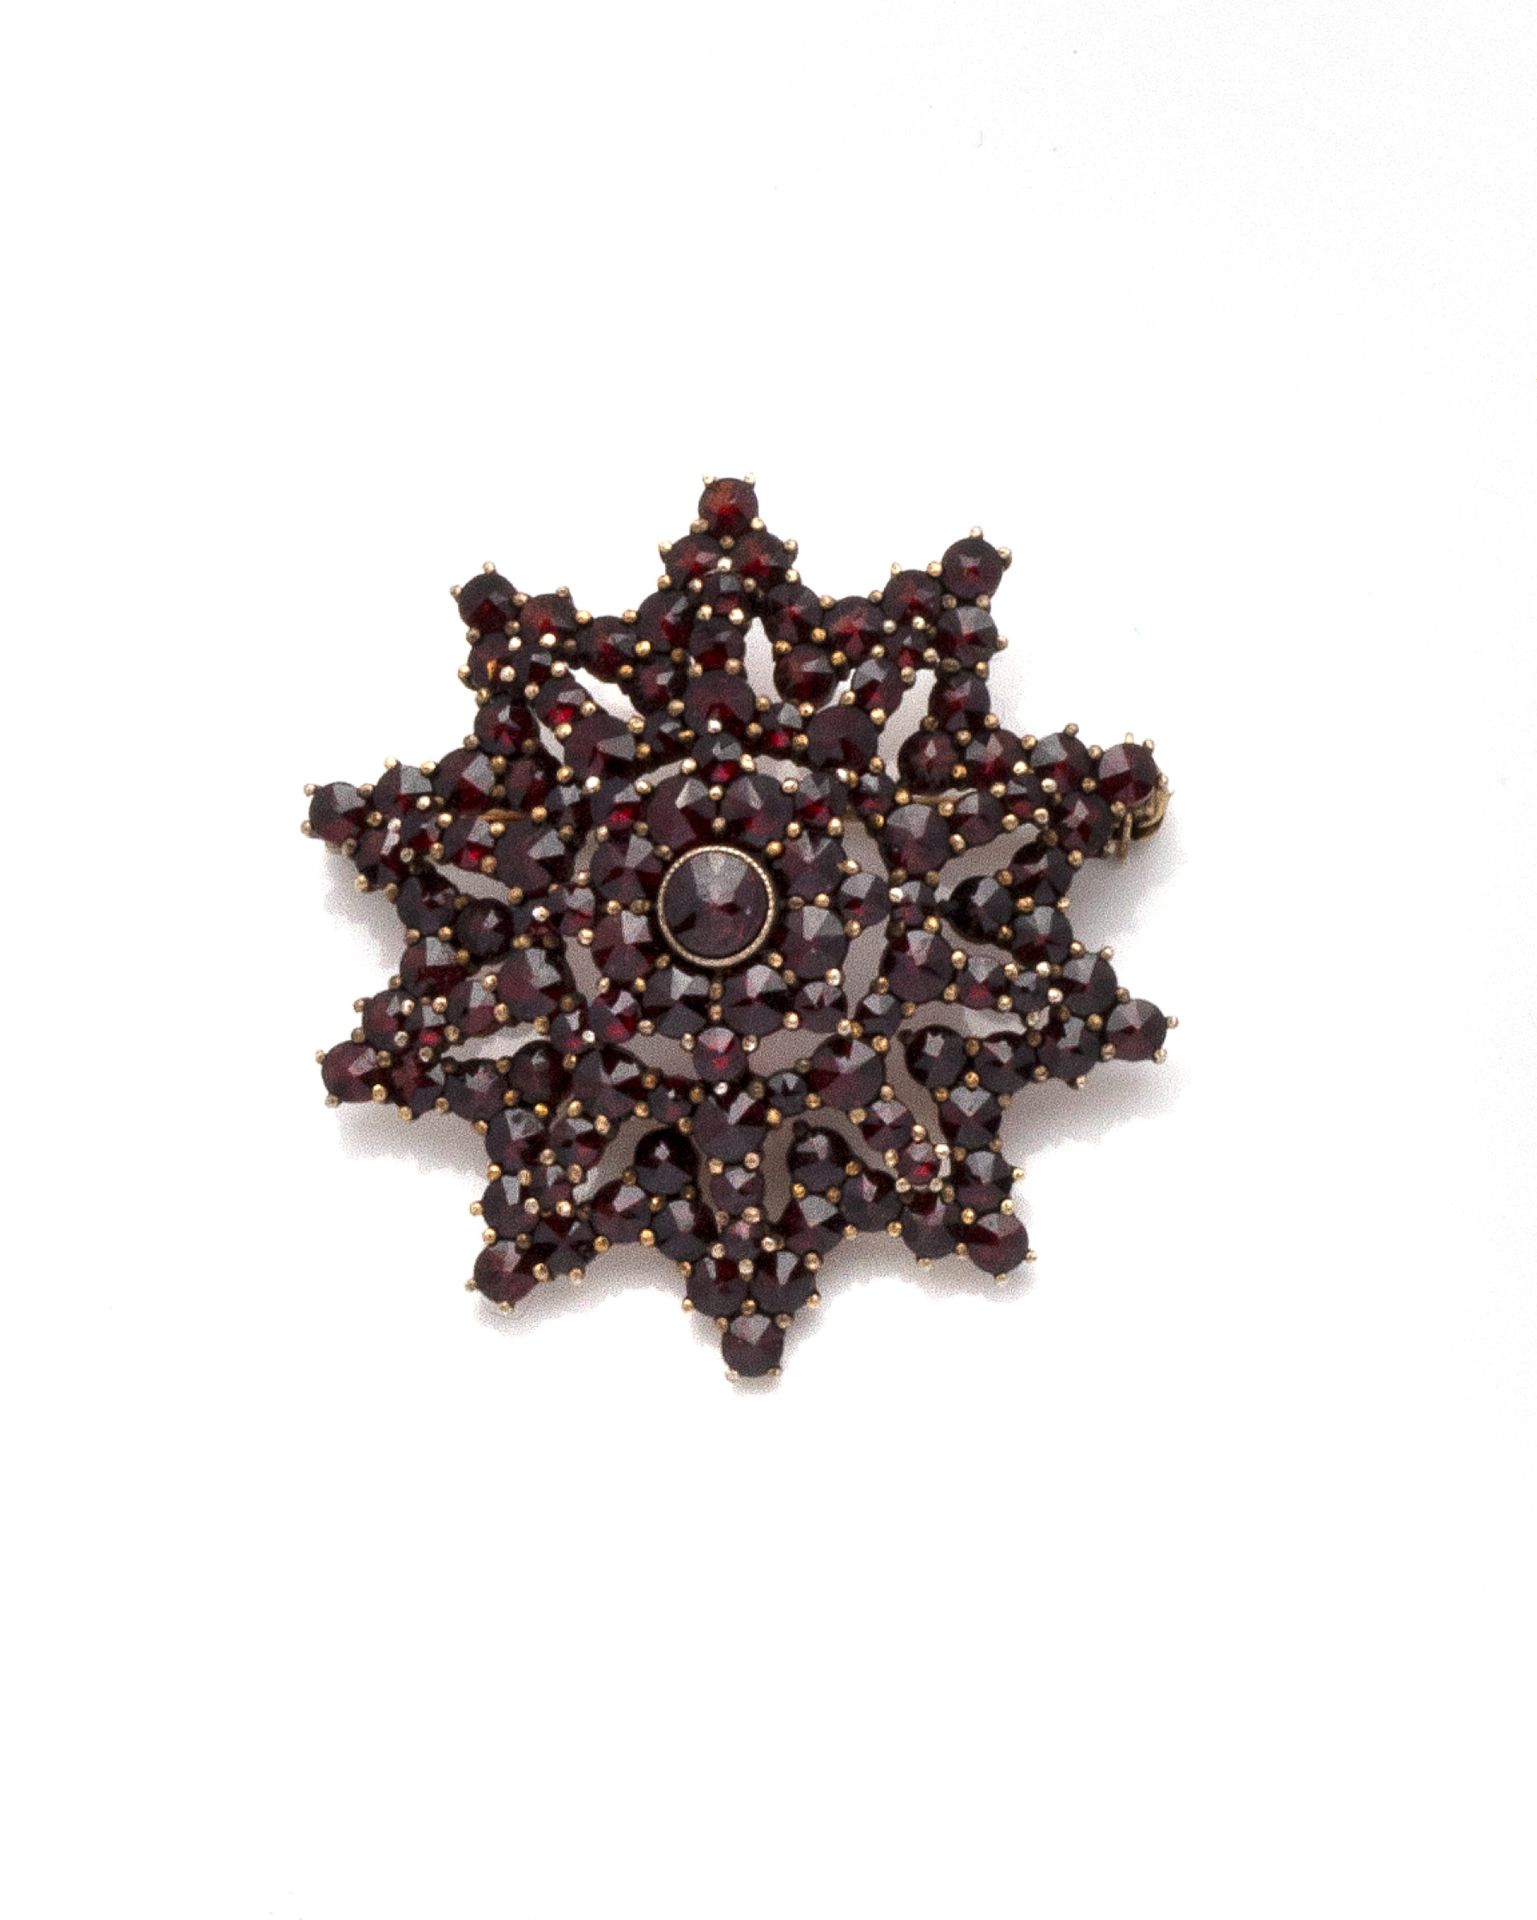 Null 一枚代表双十角星的镀金胸针，镶嵌着佩皮尼昂石榴石。有安全保障的针。

西班牙，19世纪（加泰罗尼亚印记）

直径：4厘米 - 总重量：10.91克